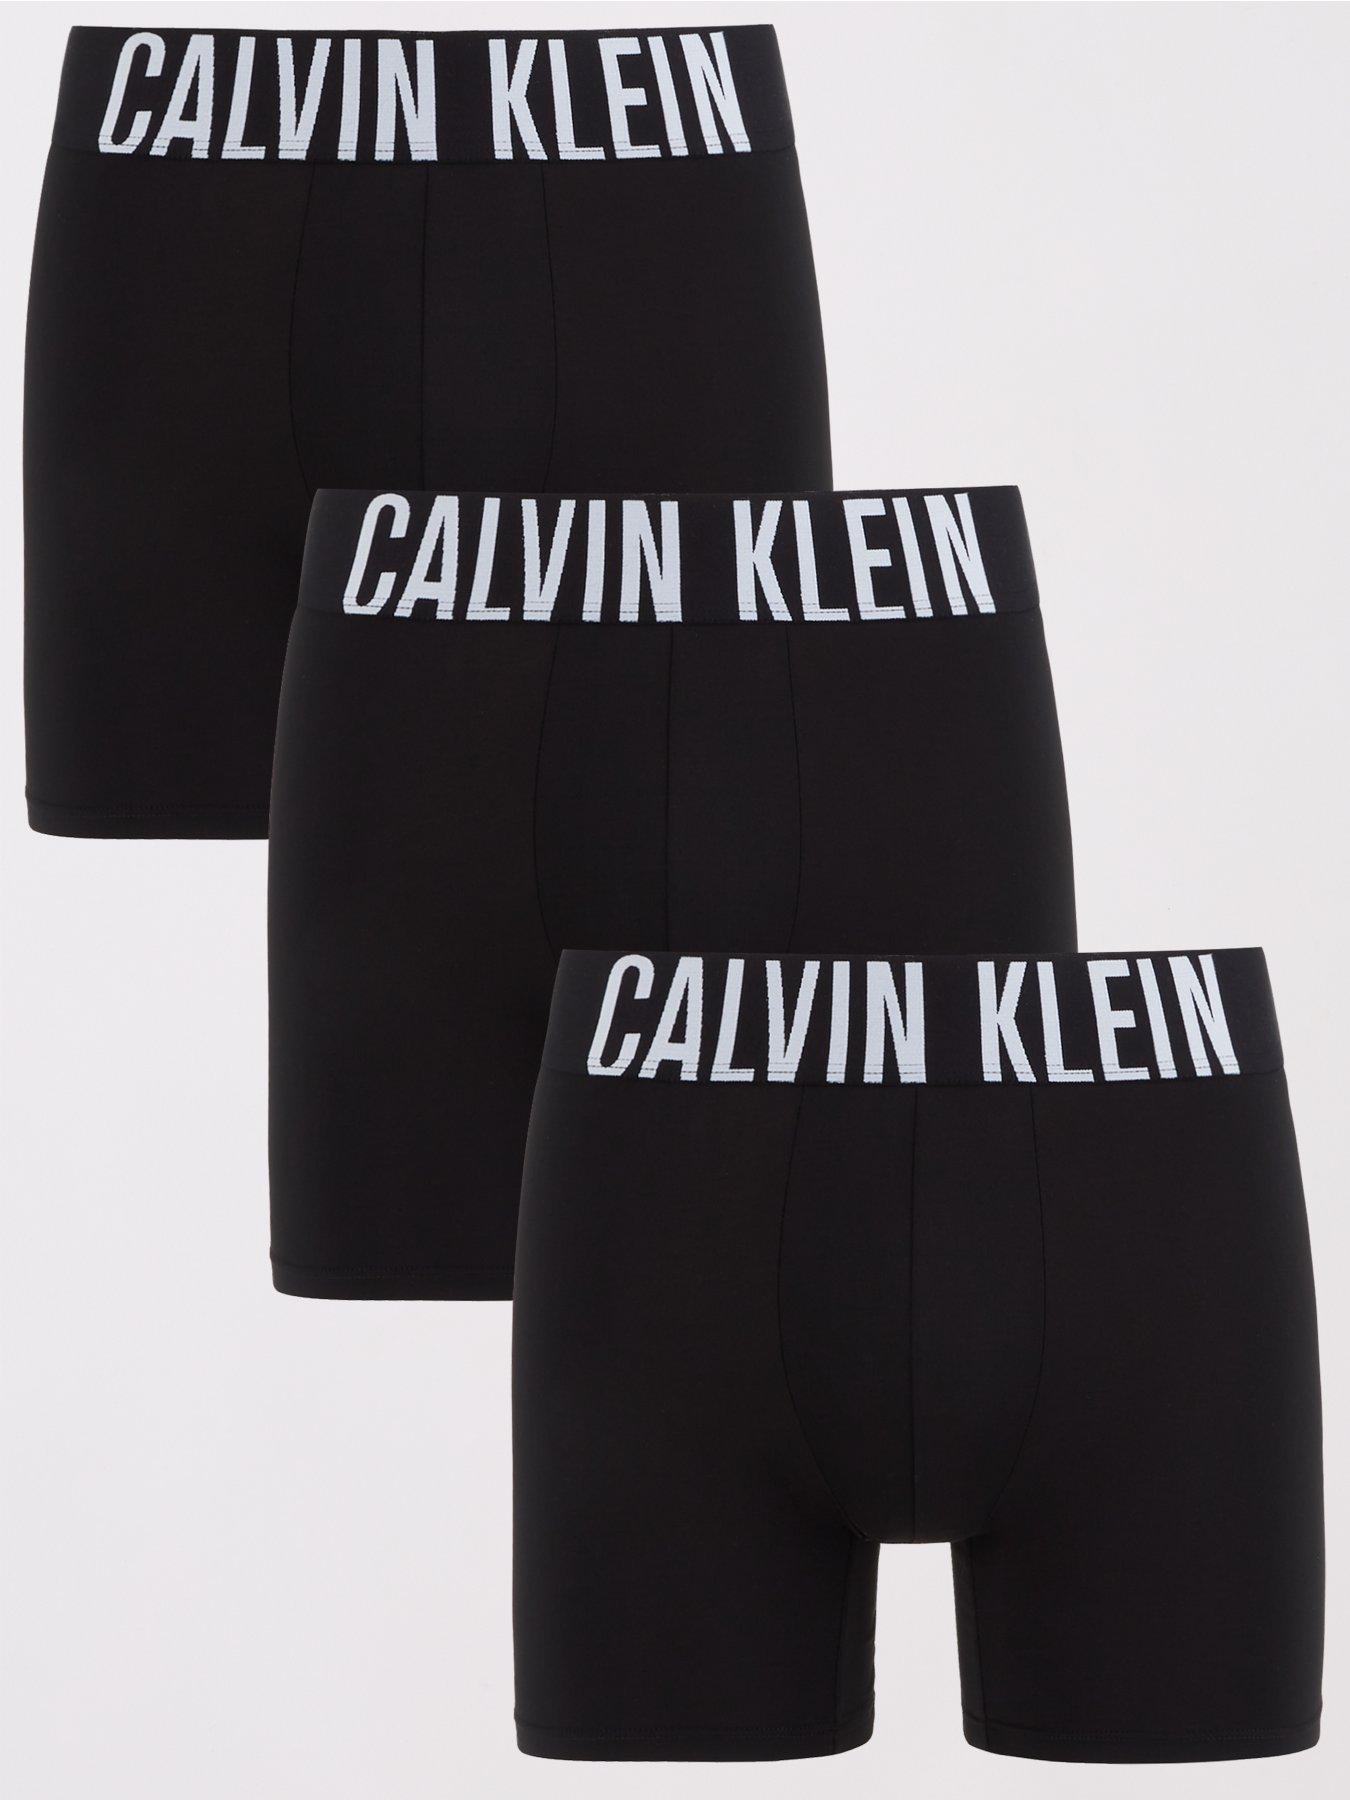 Calvin Klein Modern Cotton Stretch Trunks 5 Pack Multi